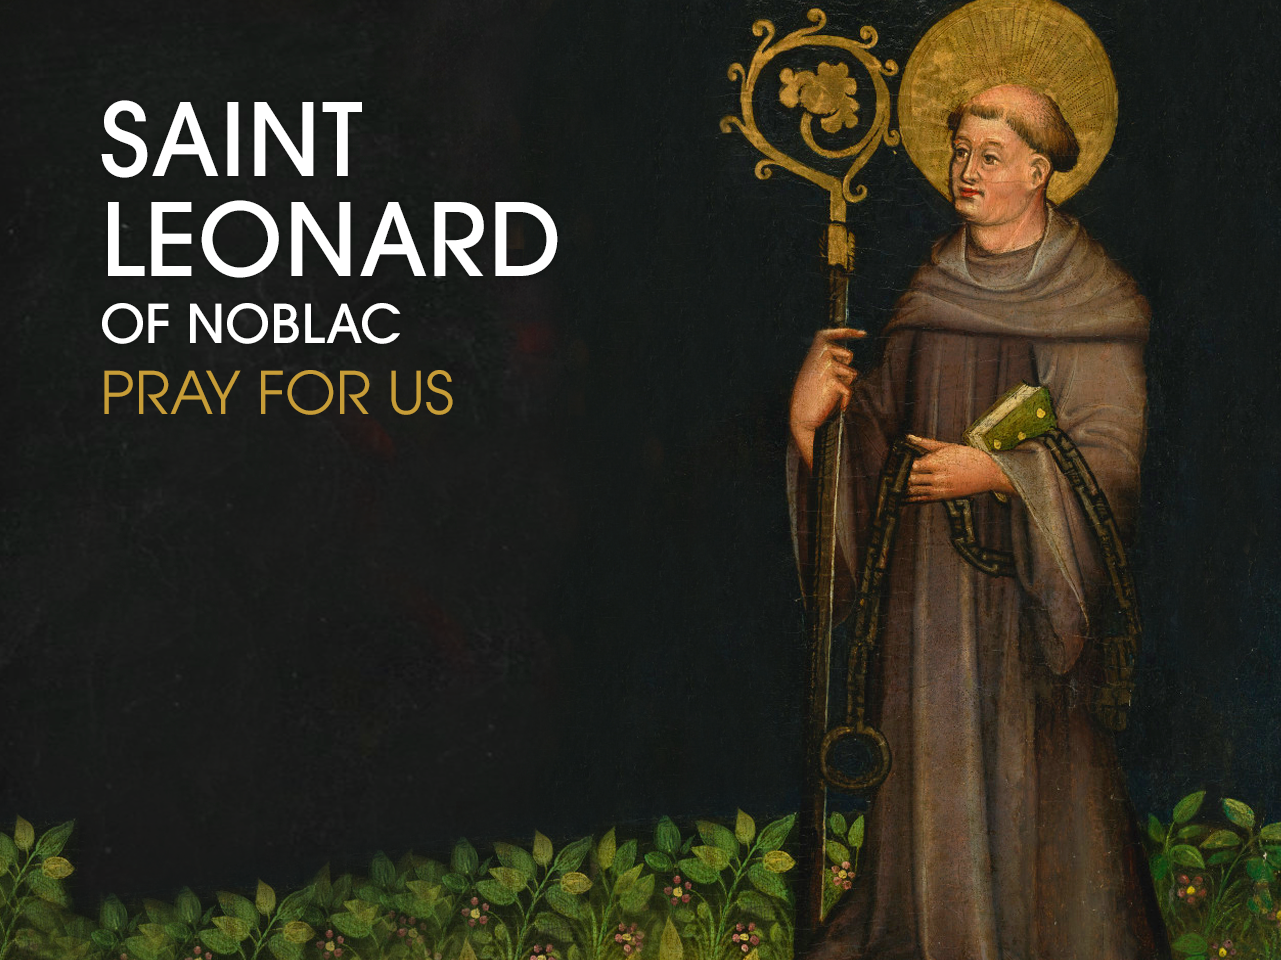 Saint Leonard of Noblac/Limonges